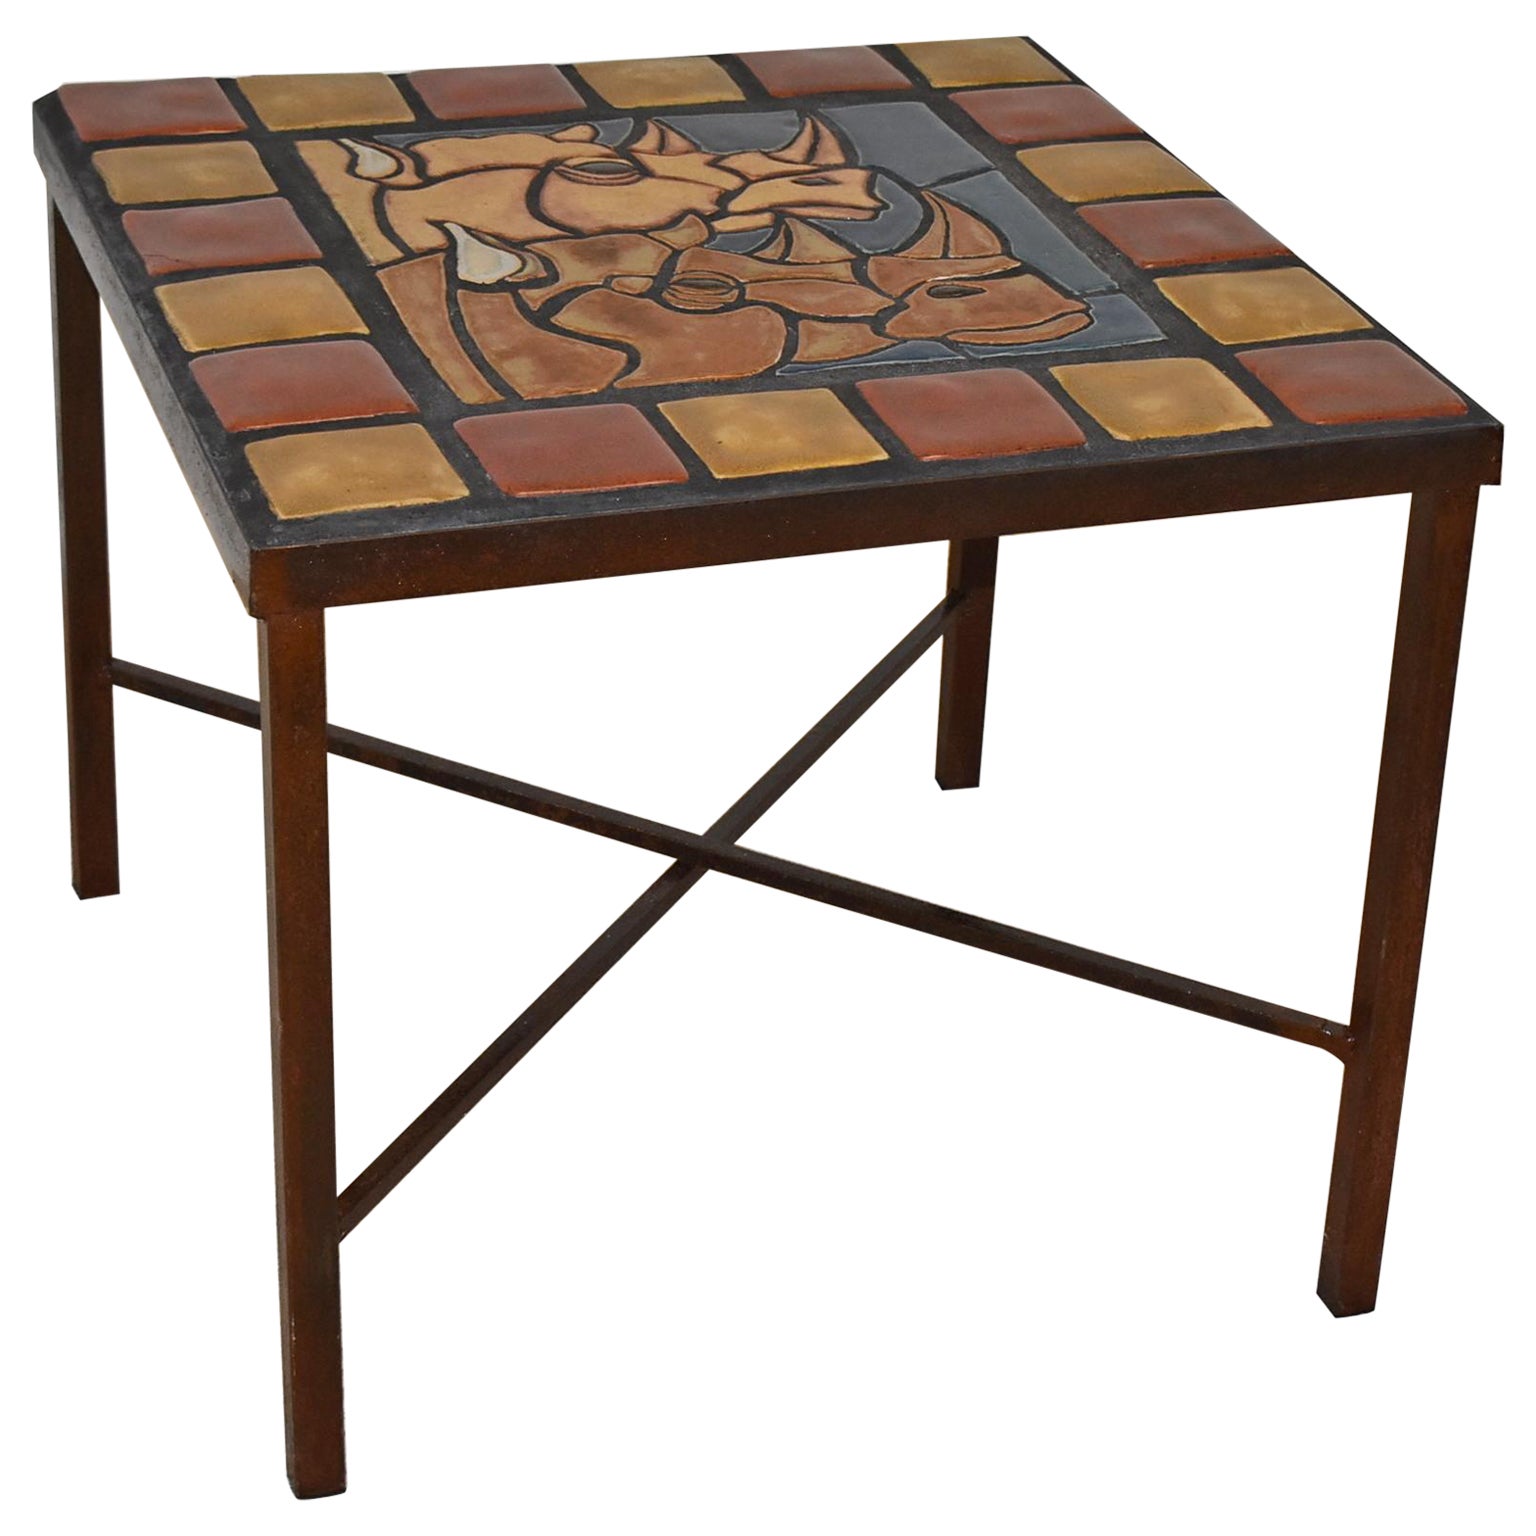 Pewabic Tile Top Side Table